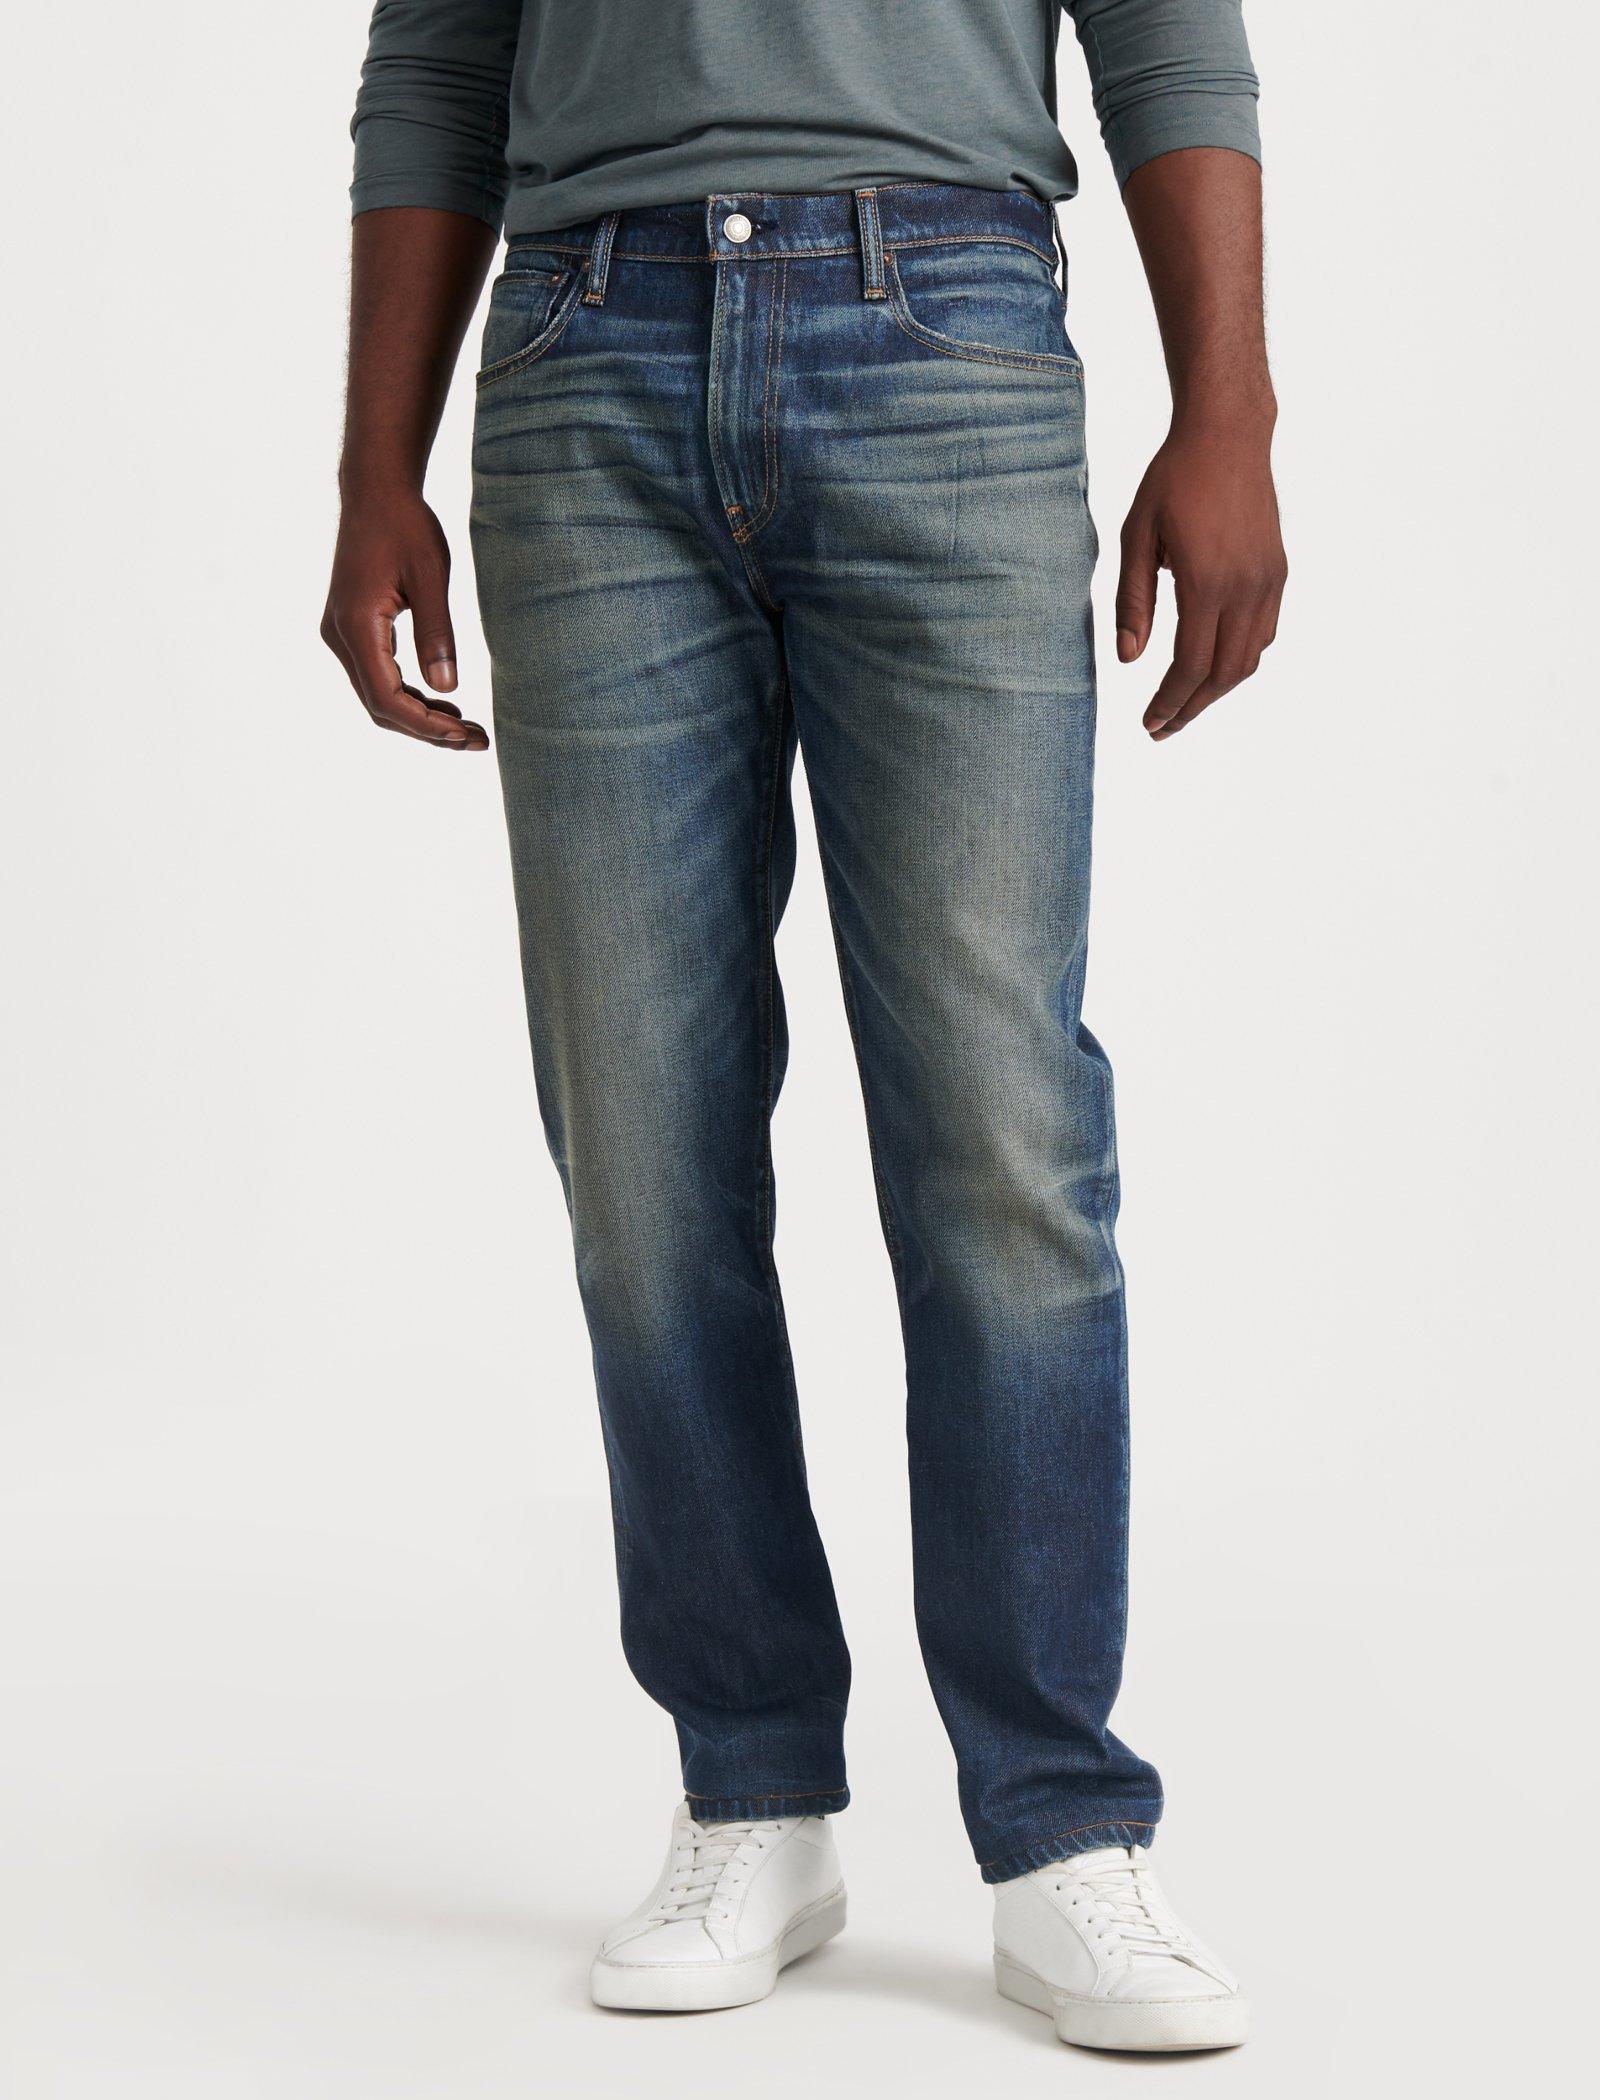 lucky brand men's stretch jeans